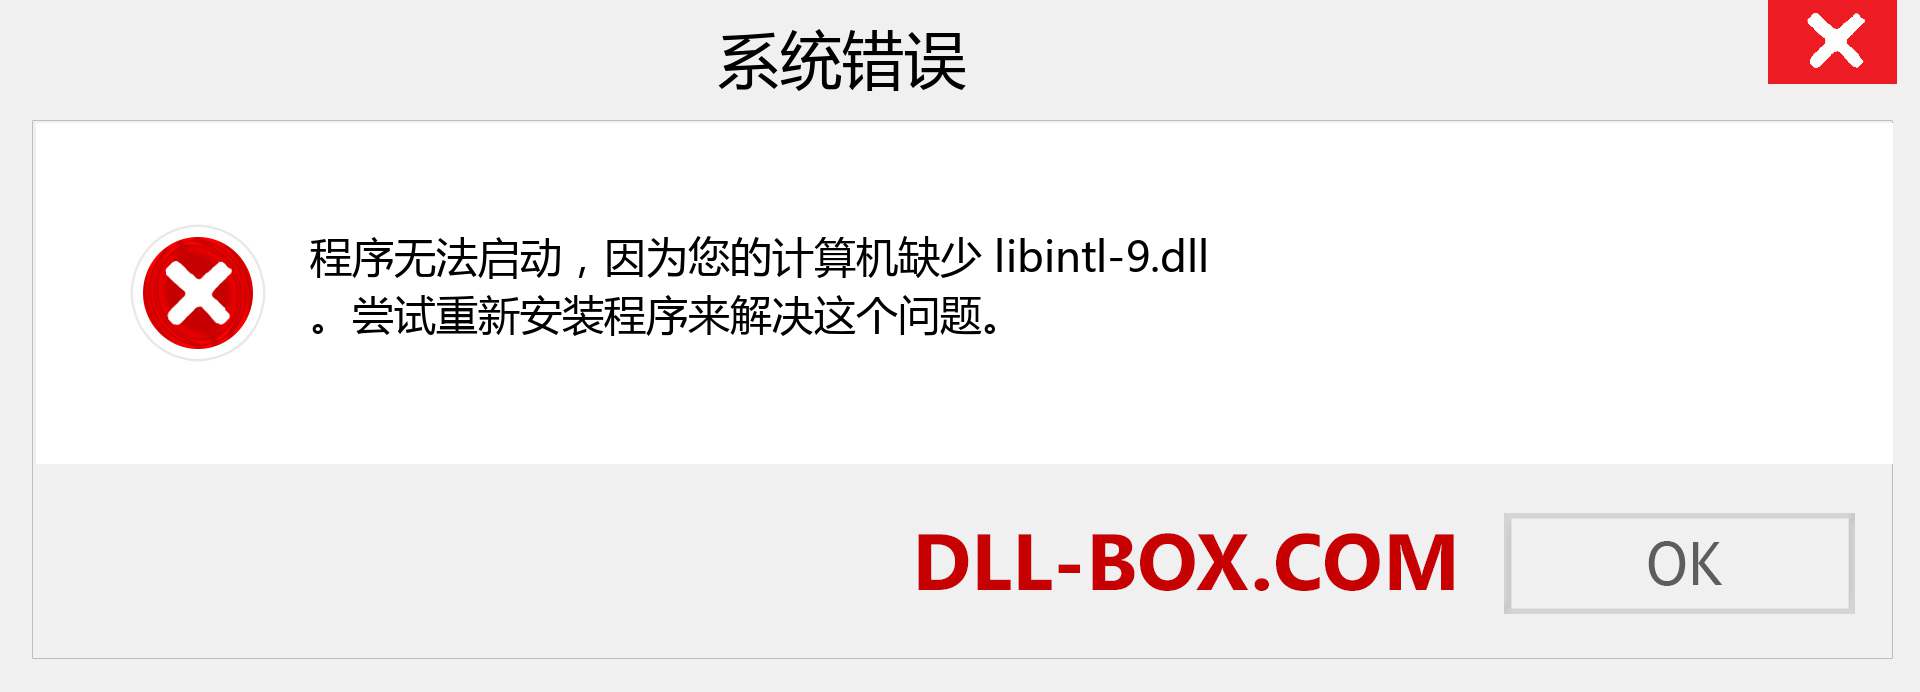 libintl-9.dll 文件丢失？。 适用于 Windows 7、8、10 的下载 - 修复 Windows、照片、图像上的 libintl-9 dll 丢失错误